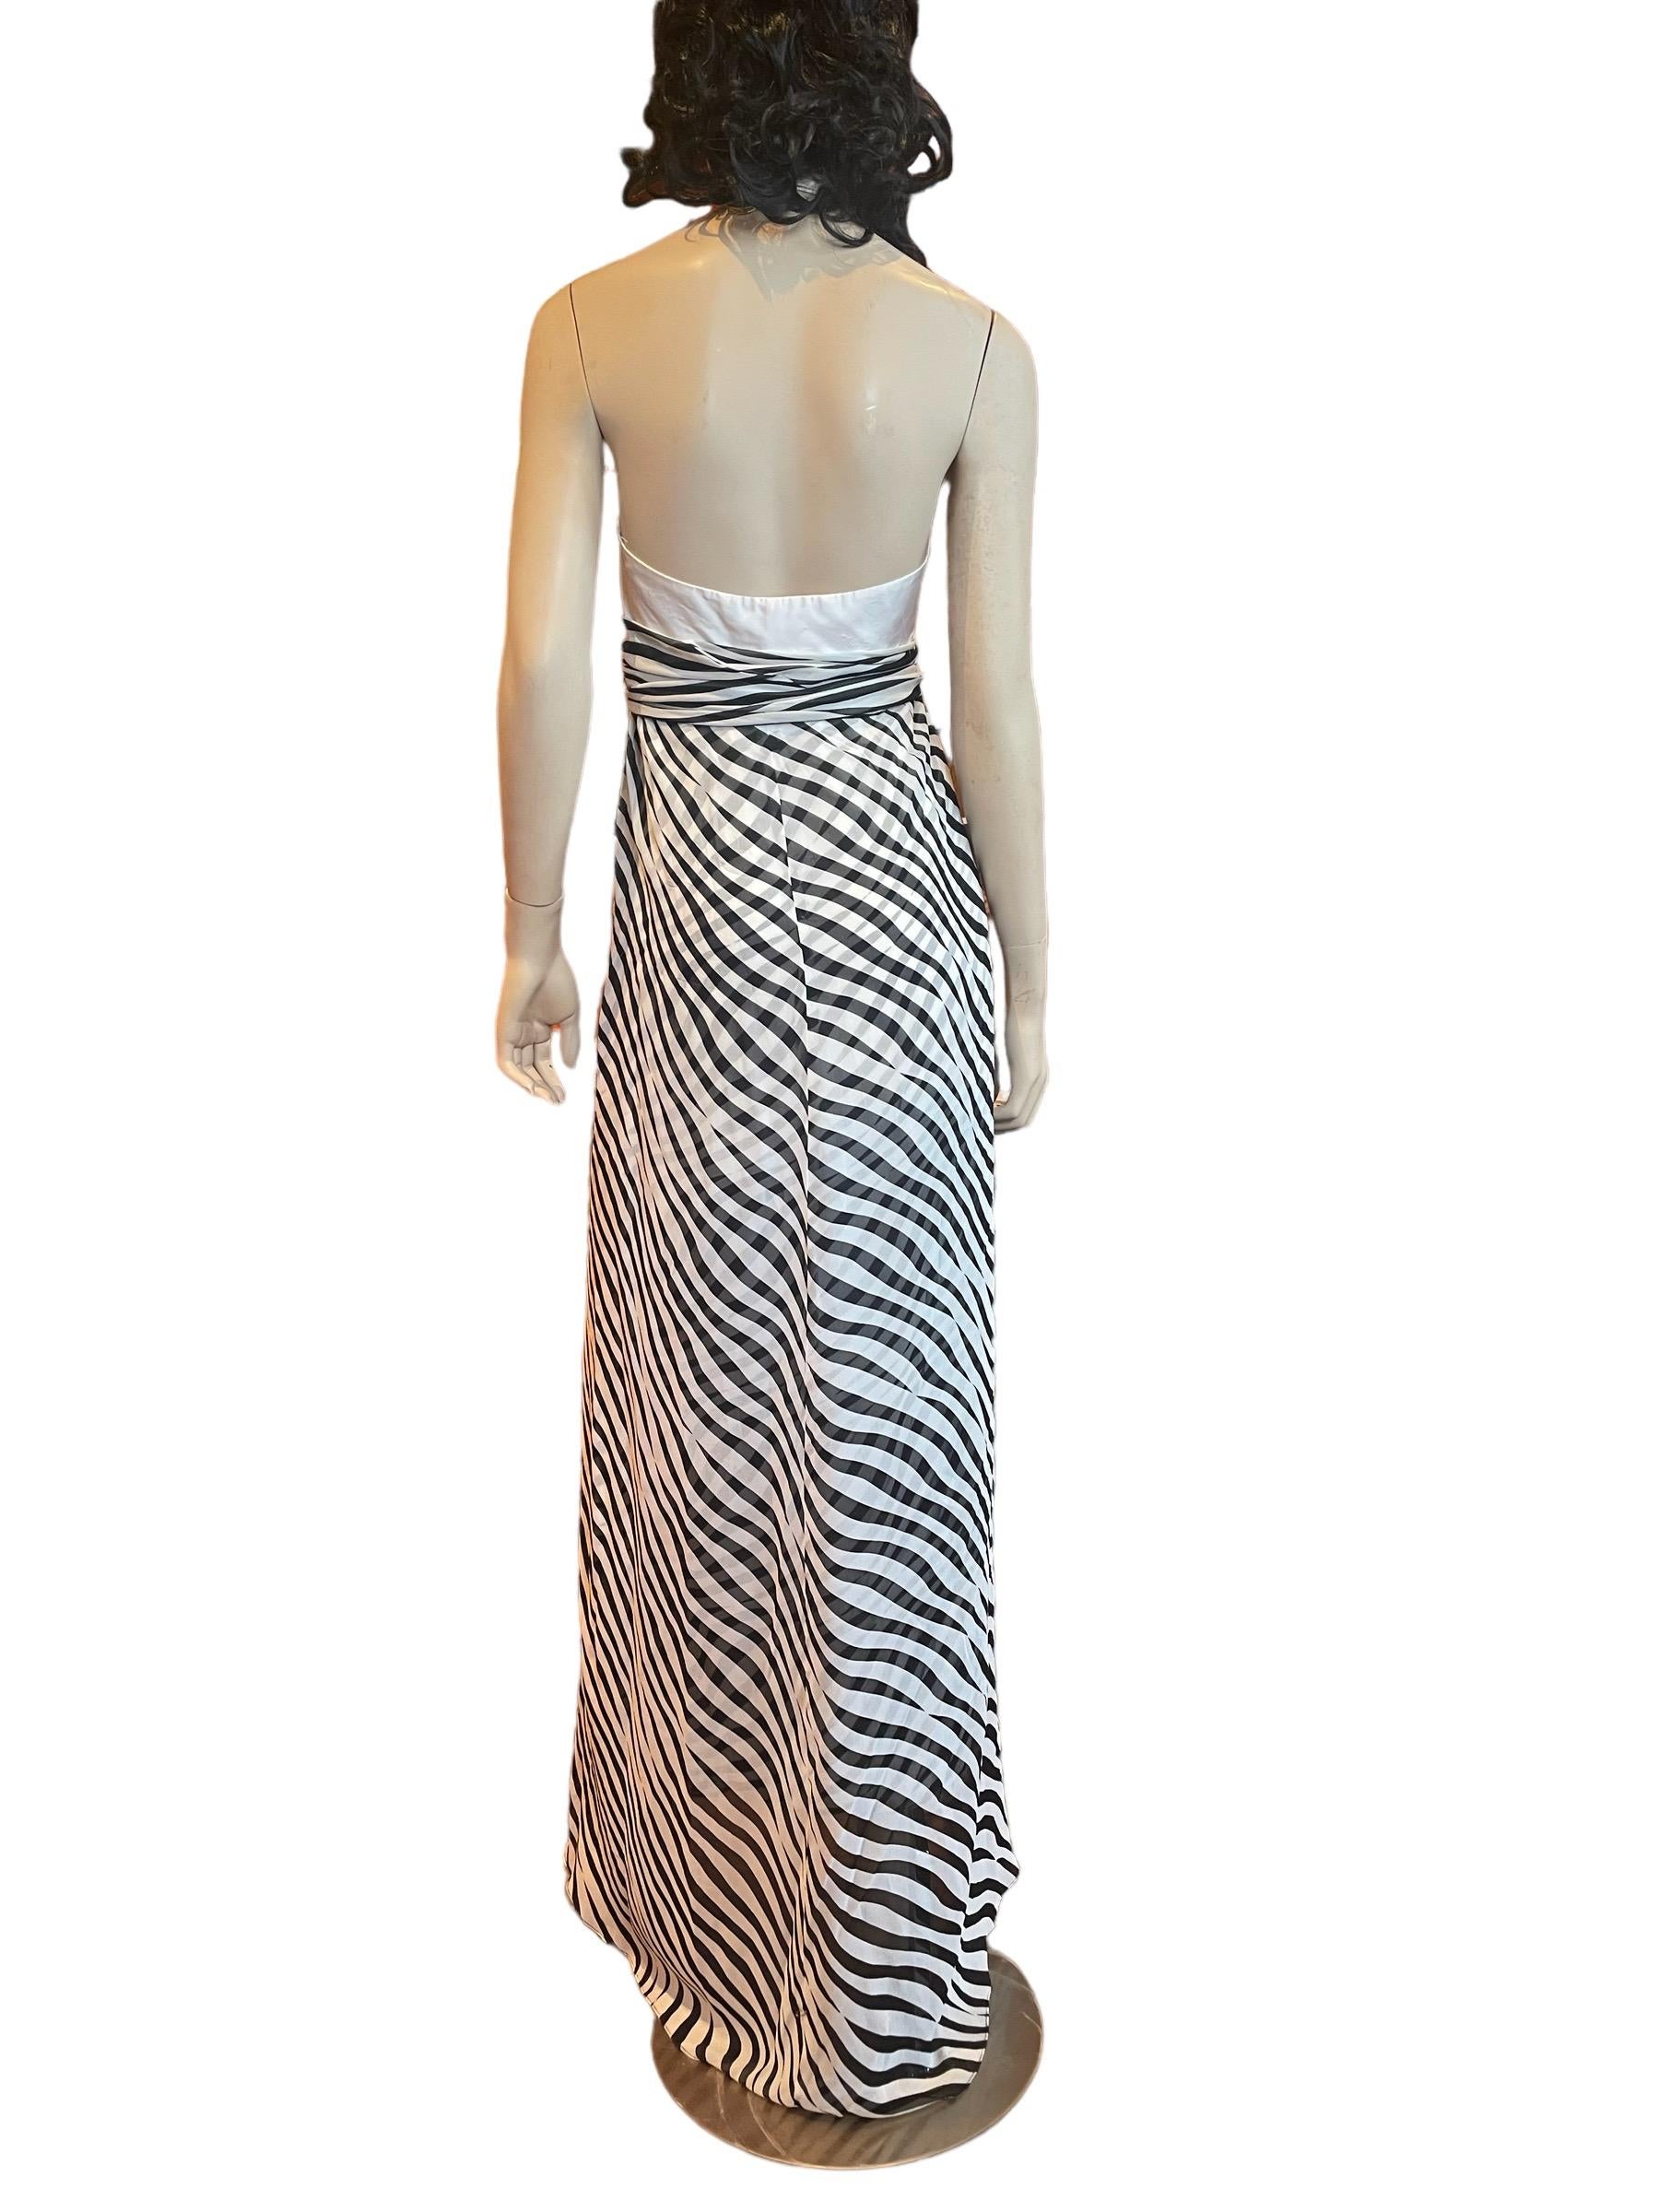 Women's Stephen Burrows Zebra Print Silk Chiffon Maxi Halter Dress with Bejeweled Bust For Sale